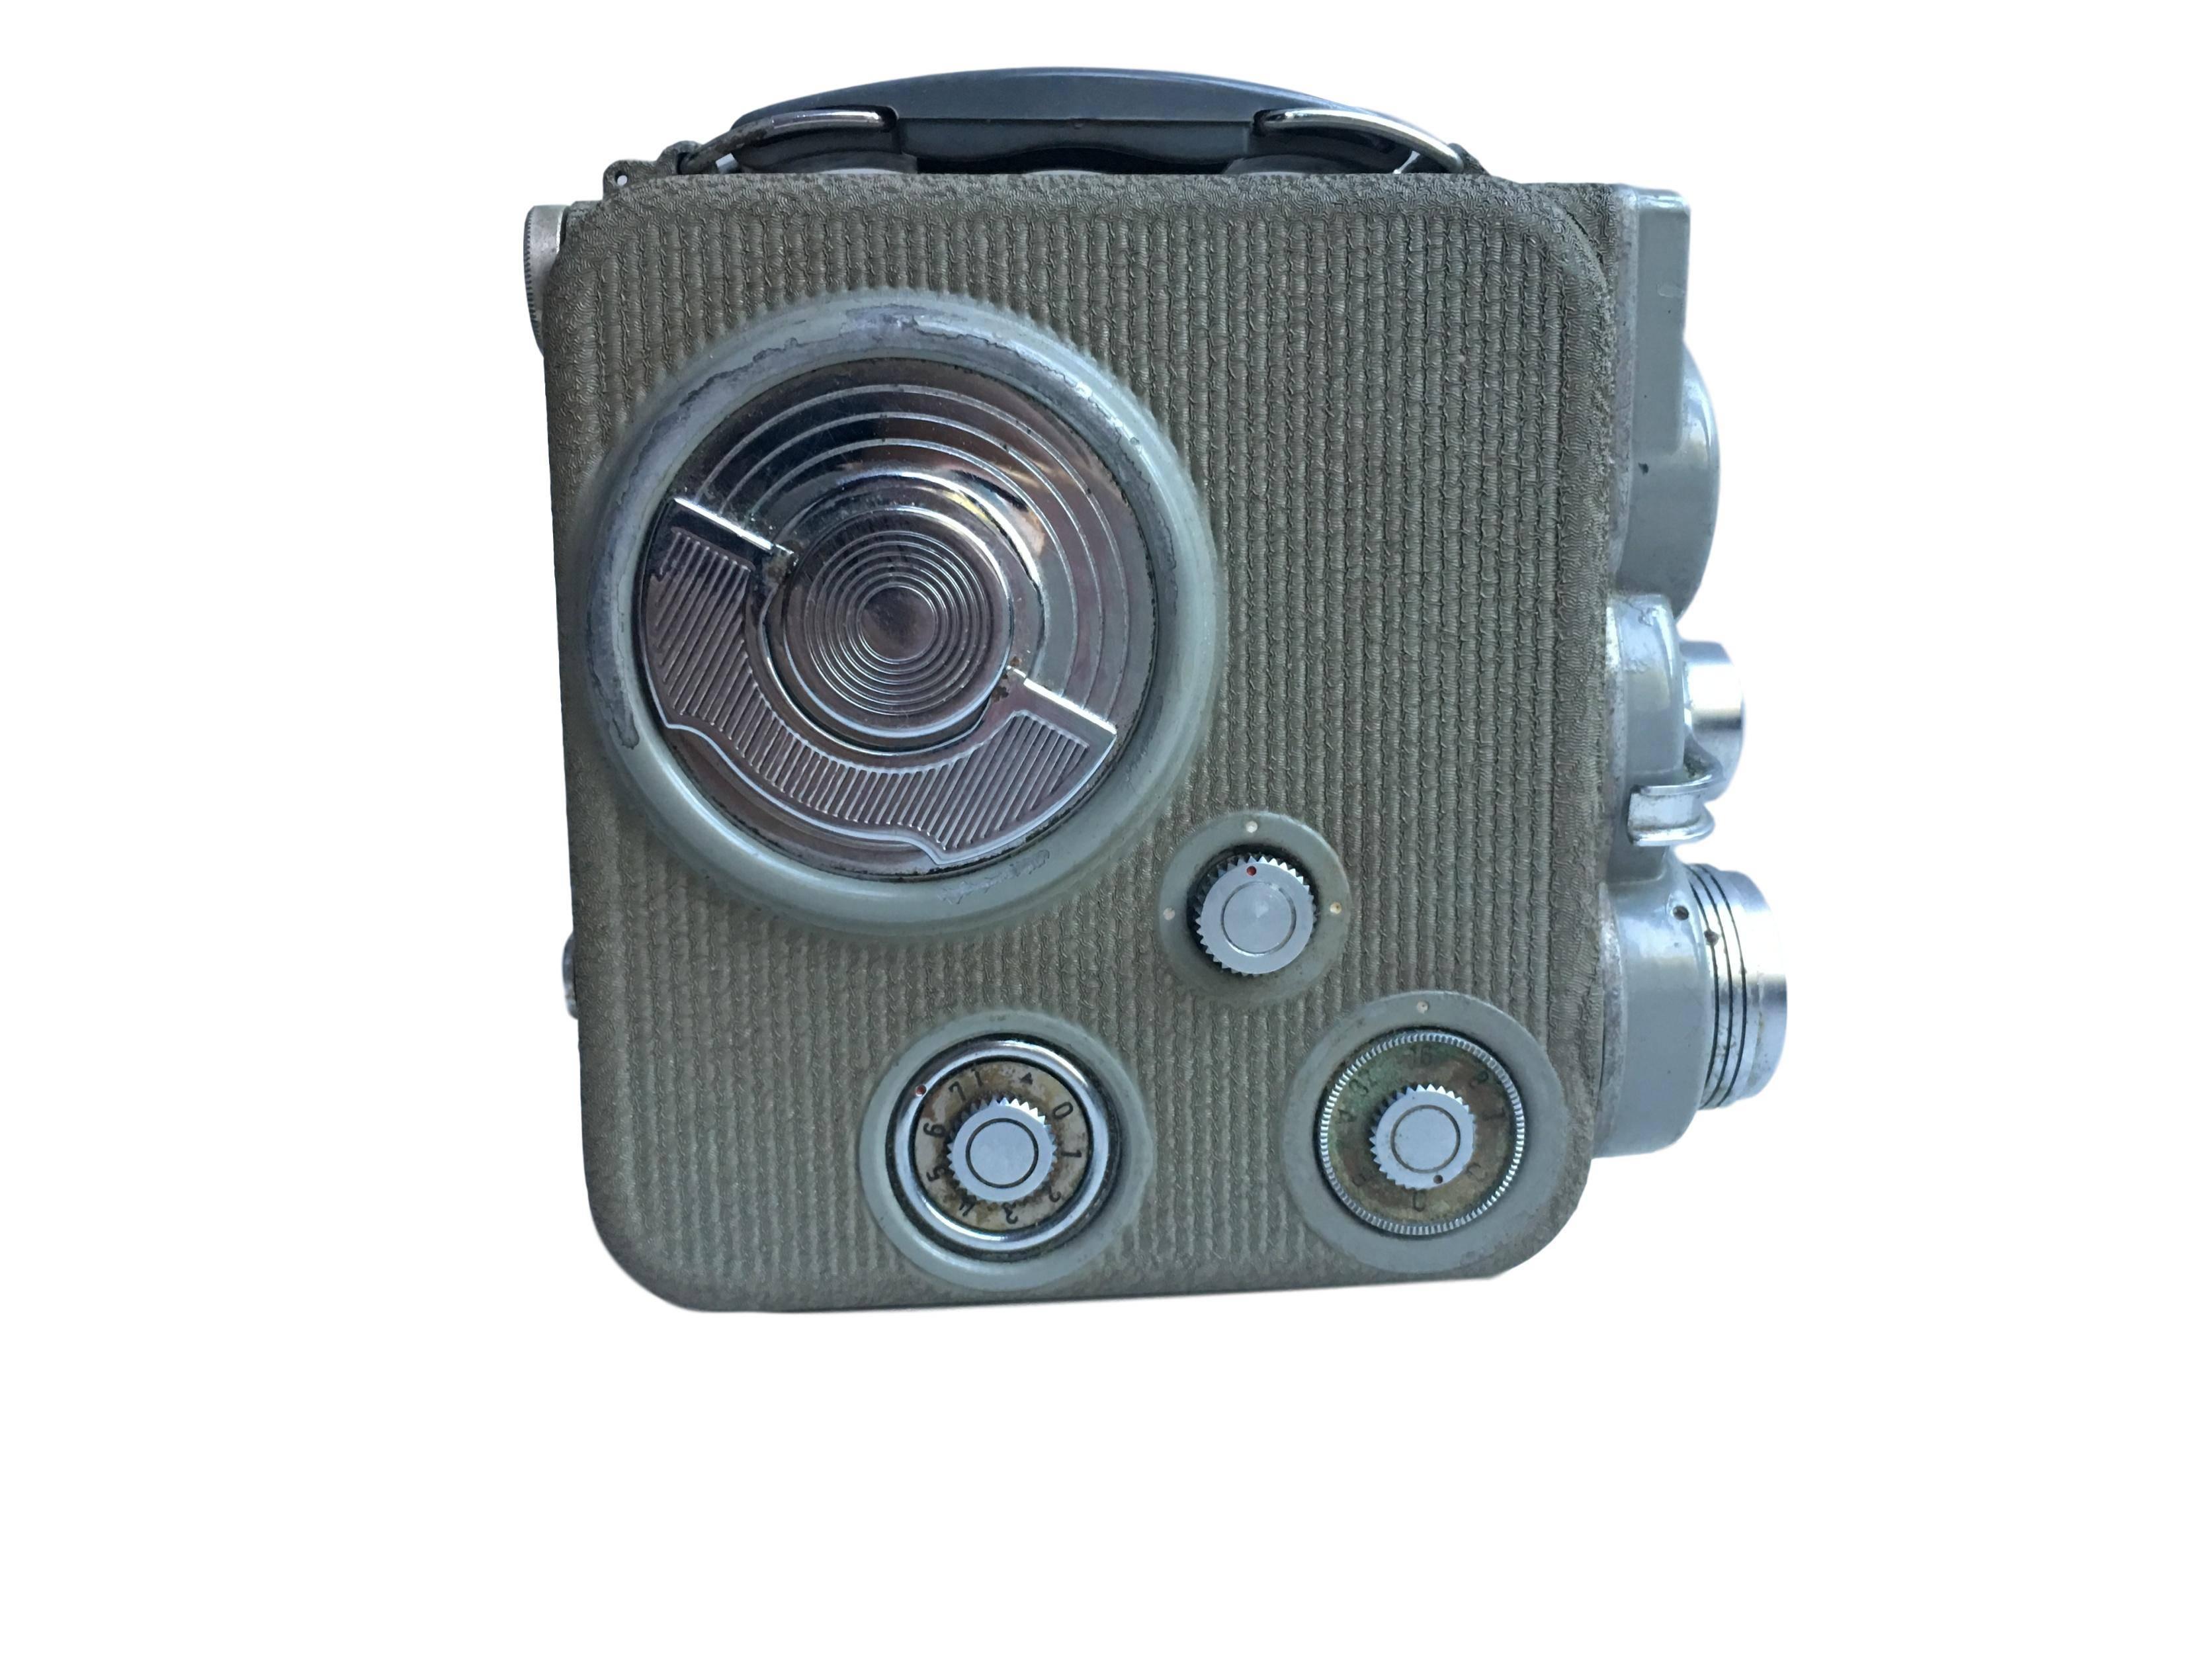 1960s video camera